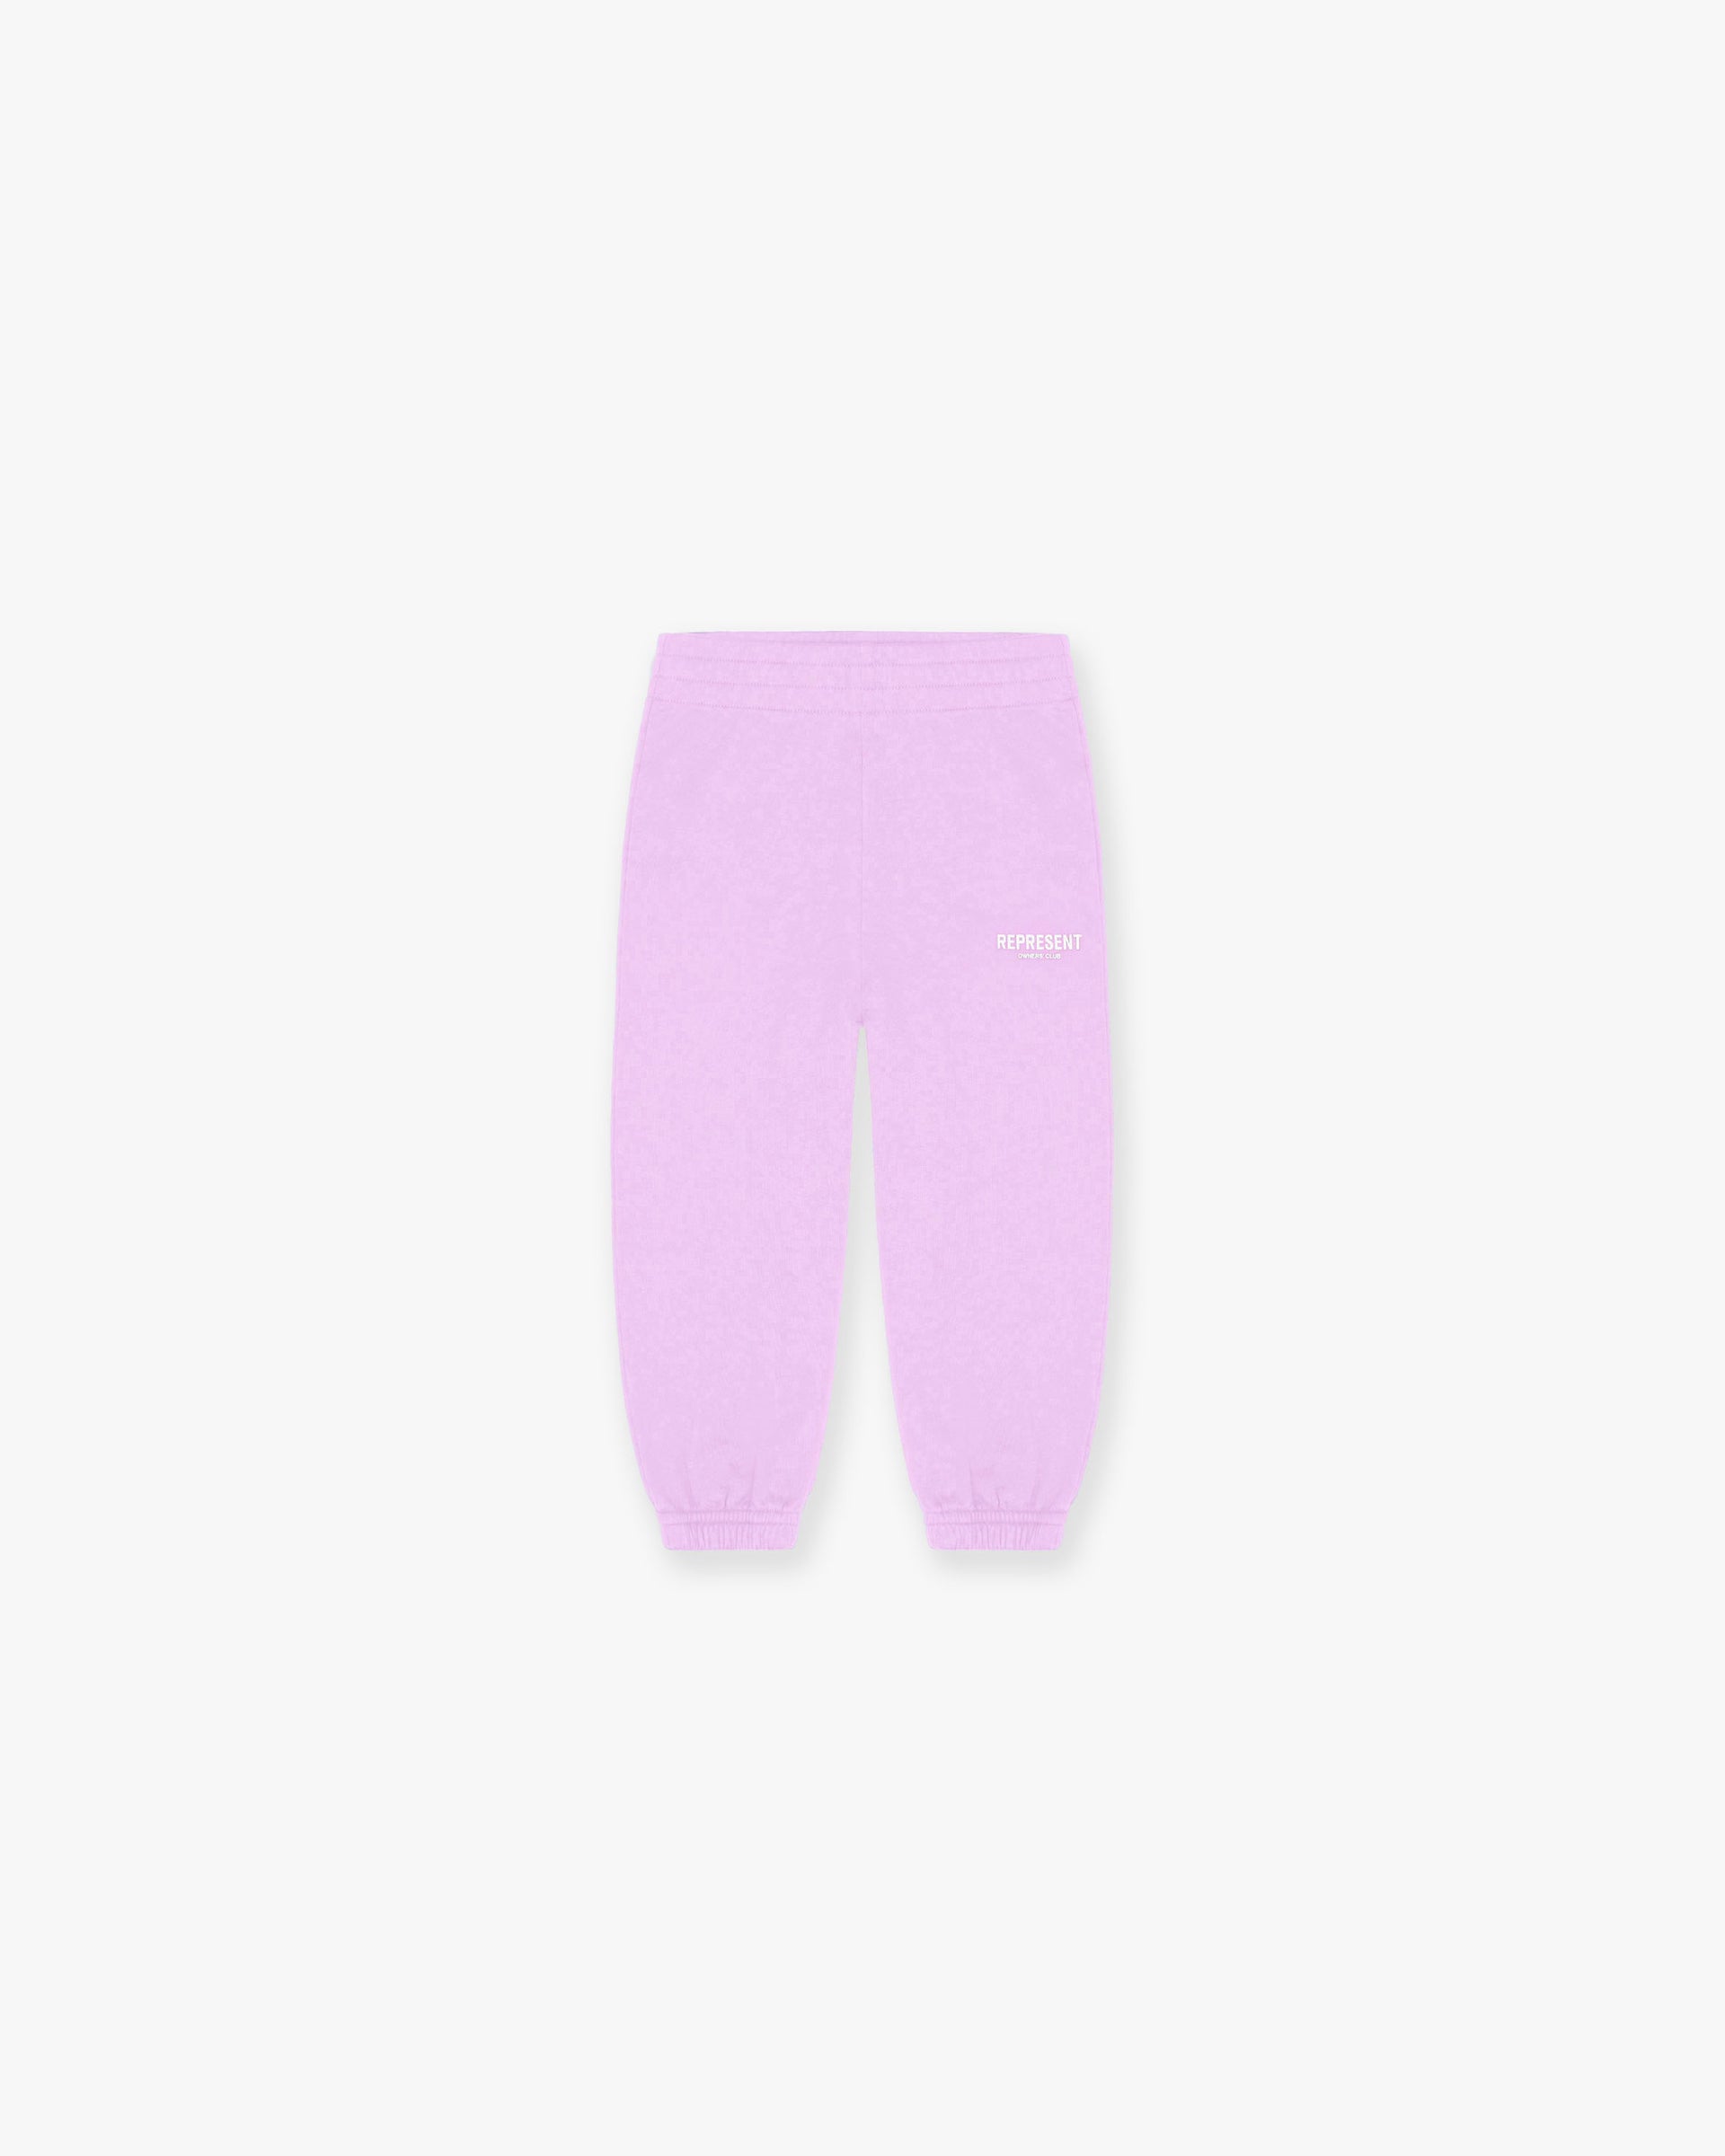 Represent Mini Owners Club Sweatpants | Lilac Pants Owners Club | Represent Clo